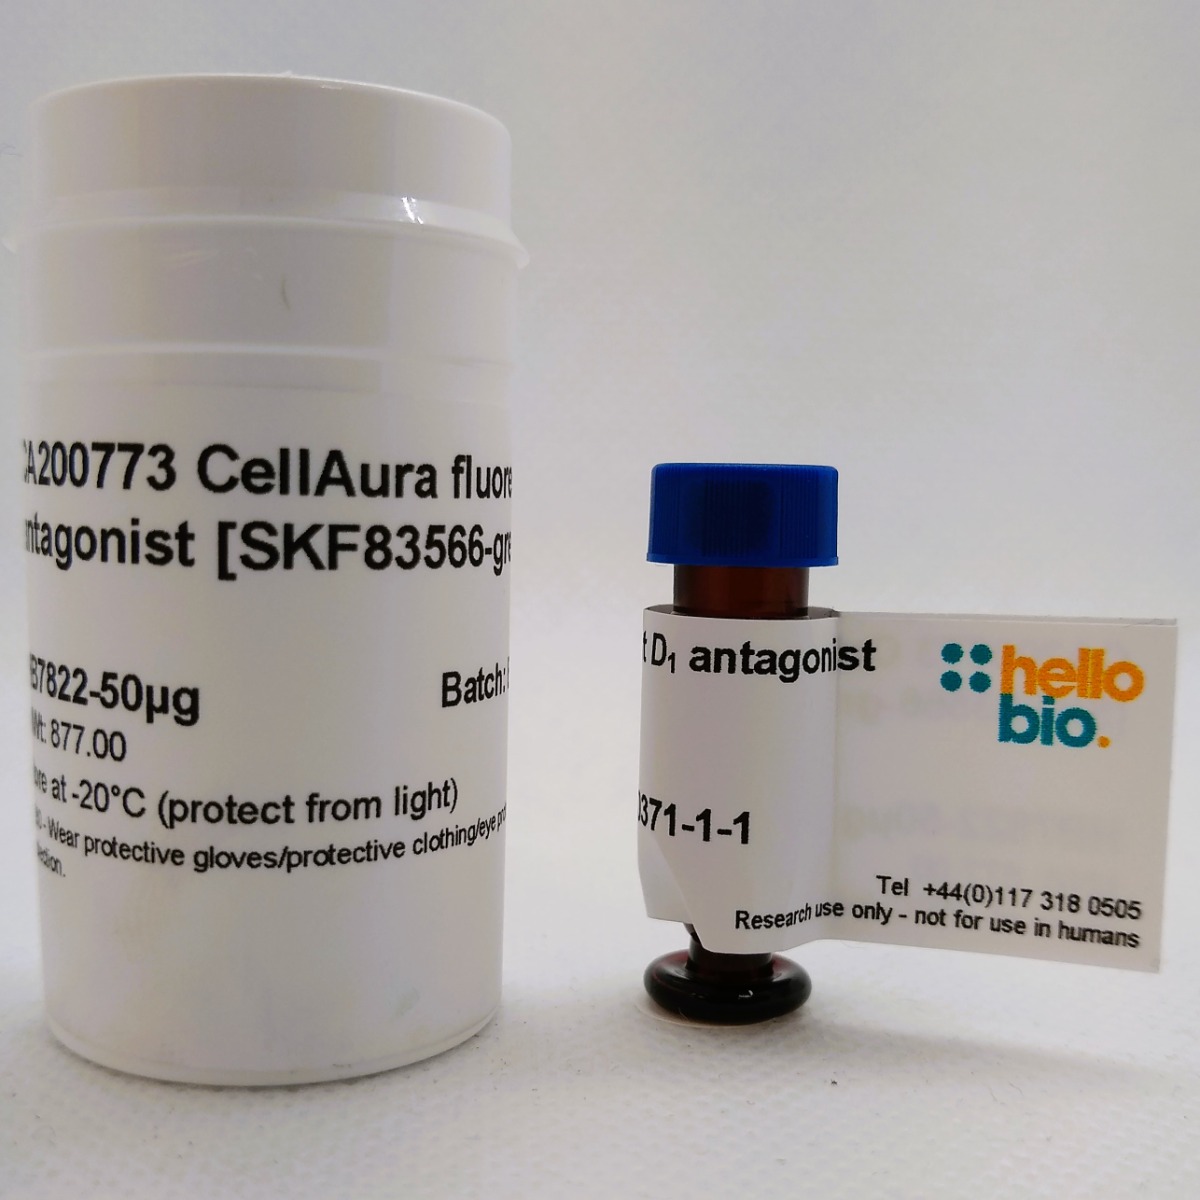 CellAura fluorescent D1 antagonist [SKF83566-green] product vial image | Hello Bio